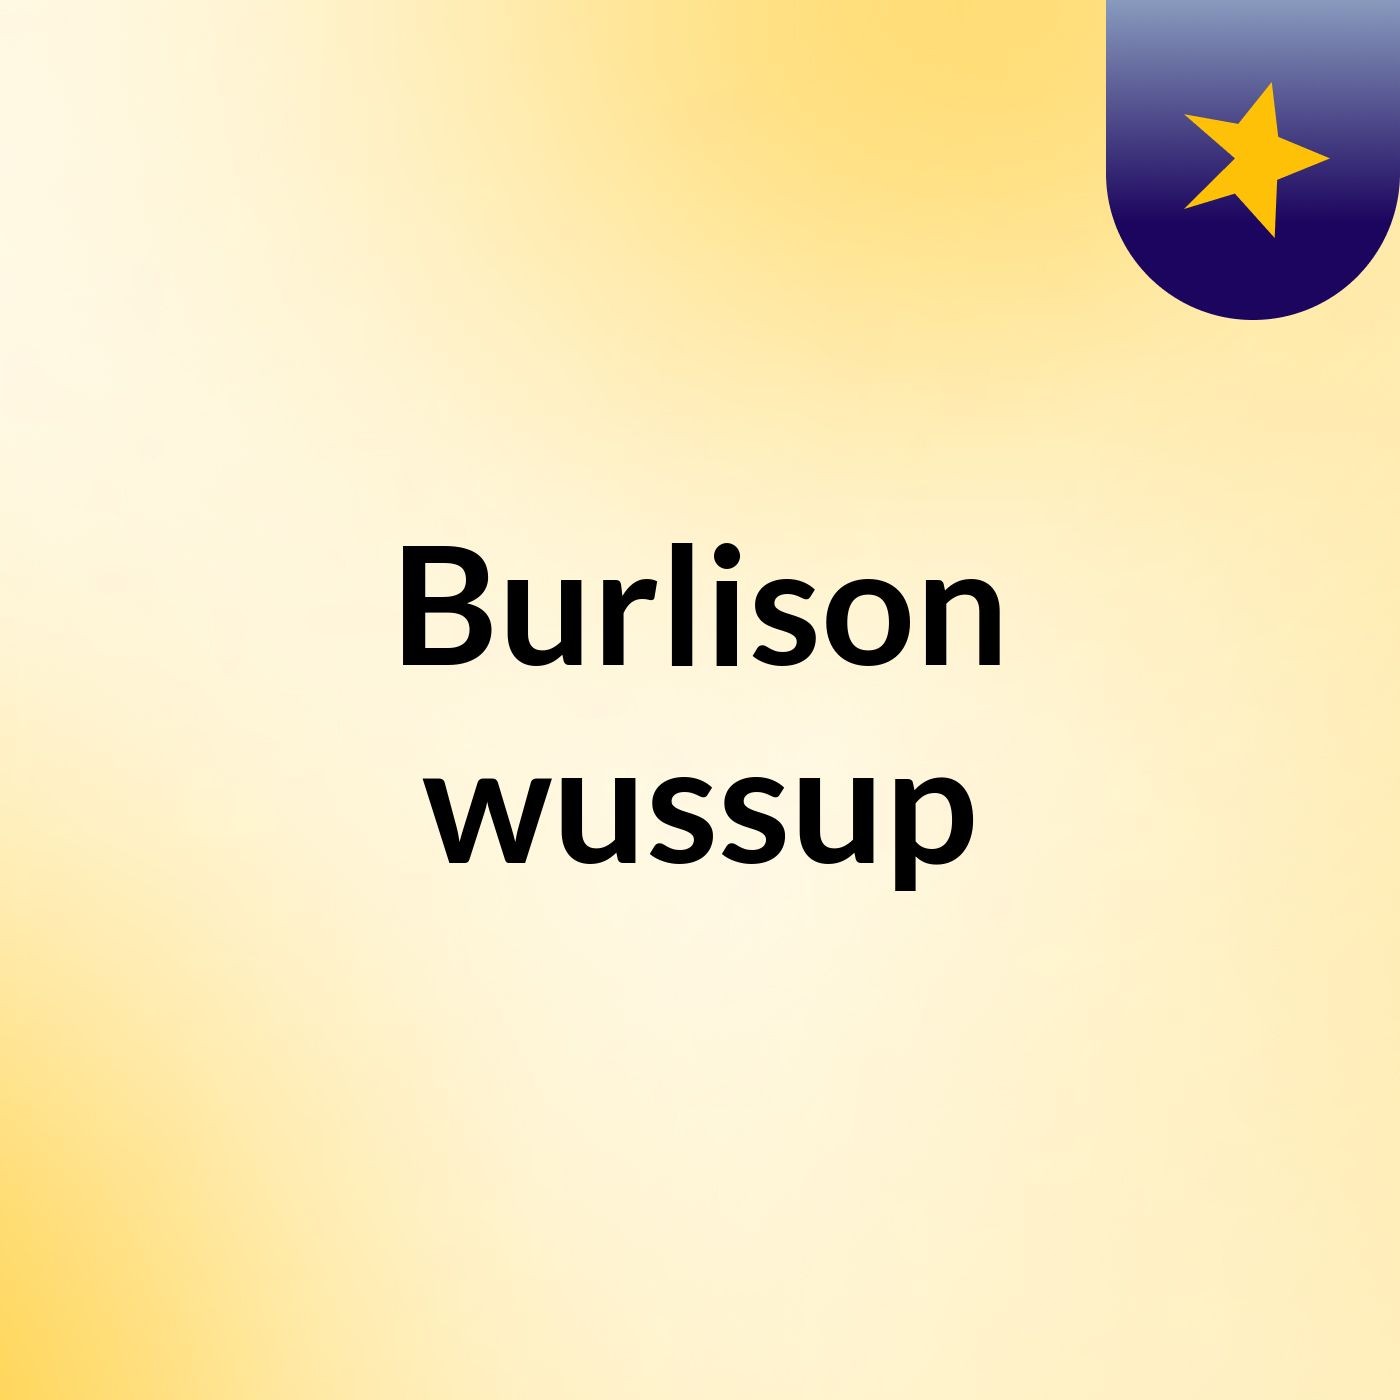 Burlison wussup